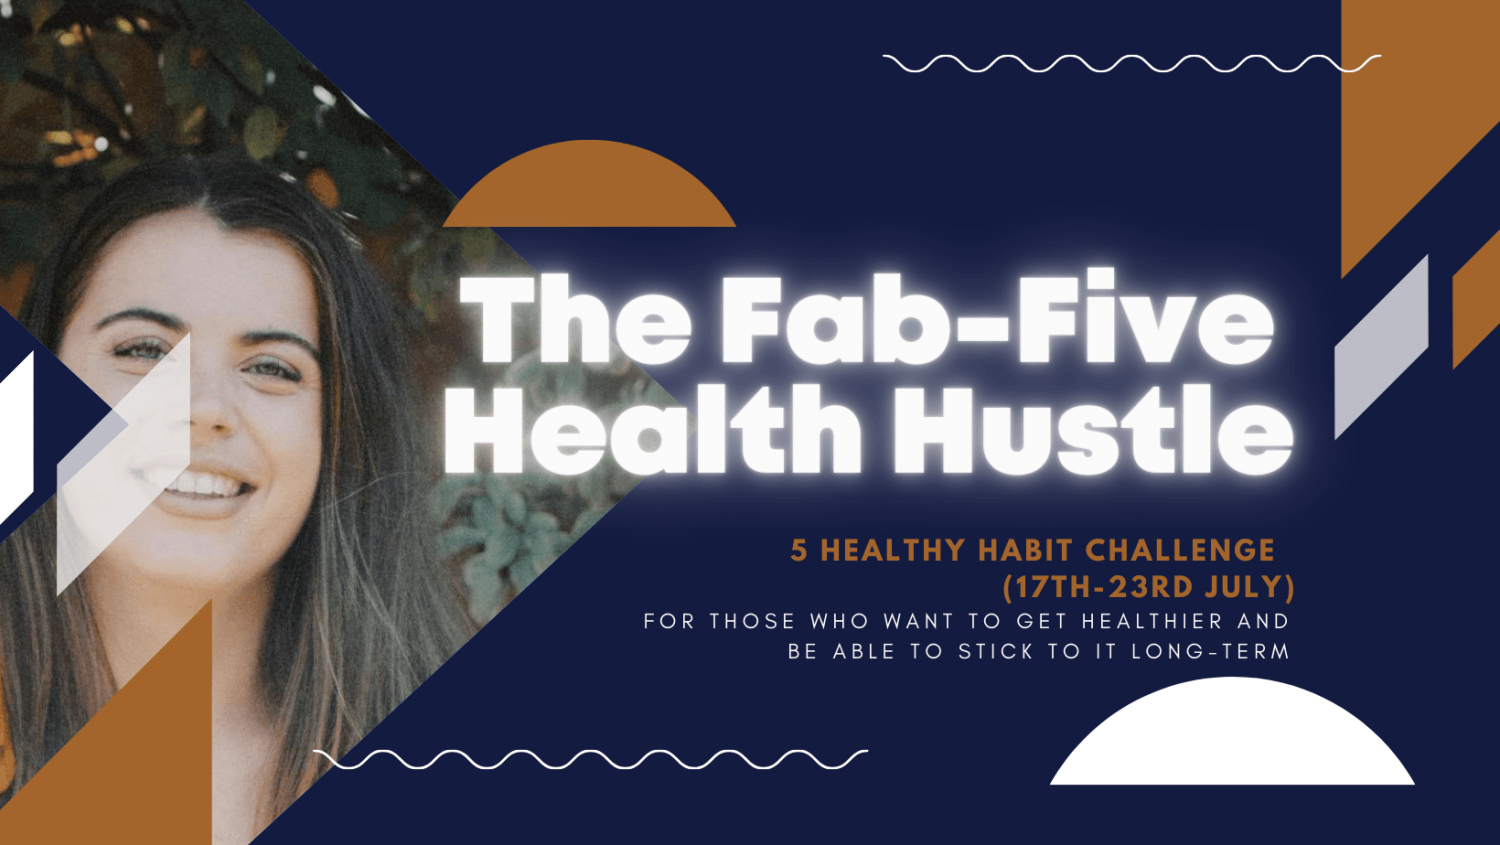 The fab-five health hustle challenge!